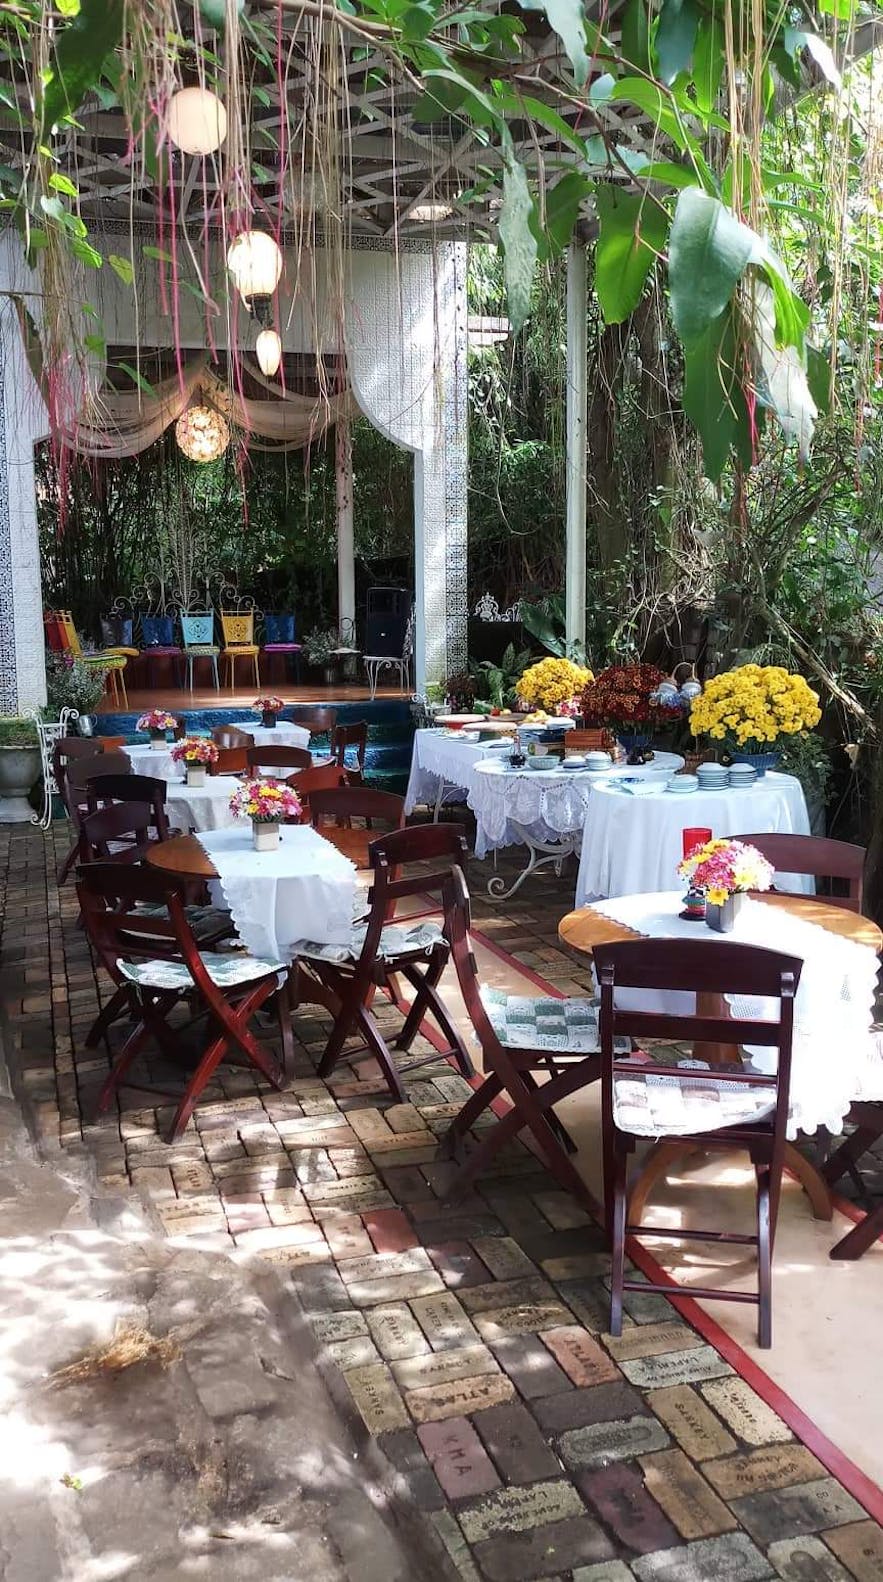 Al fresco dining area at Marcia Adams’ Restaurant